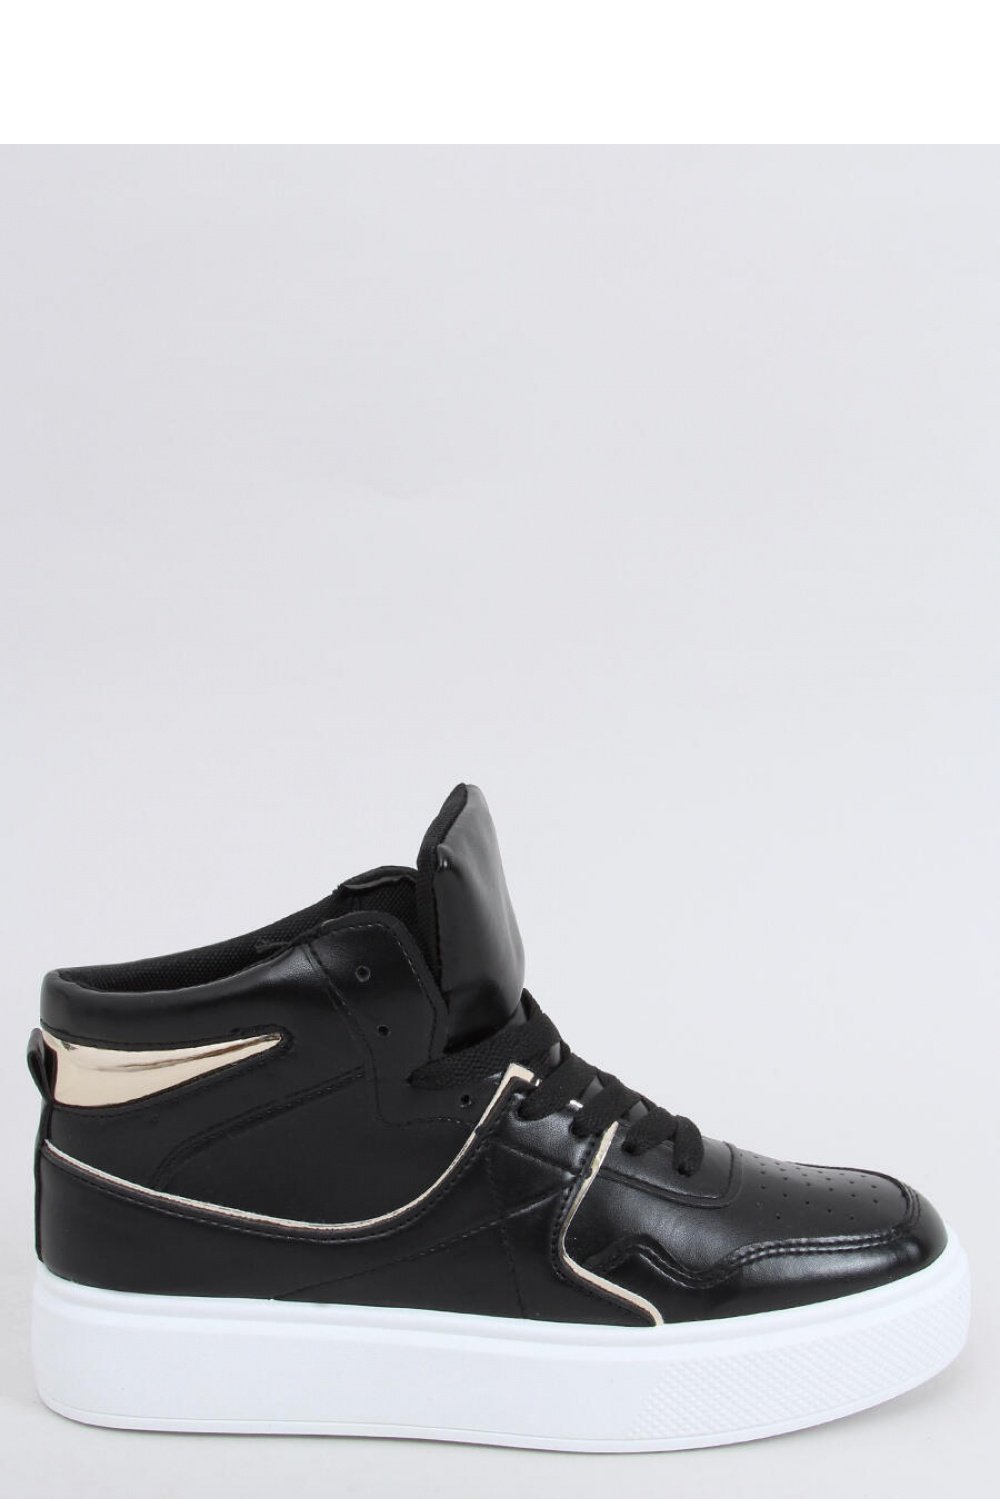 Sport Shoes model 162892 Inello Posh Styles Apparel